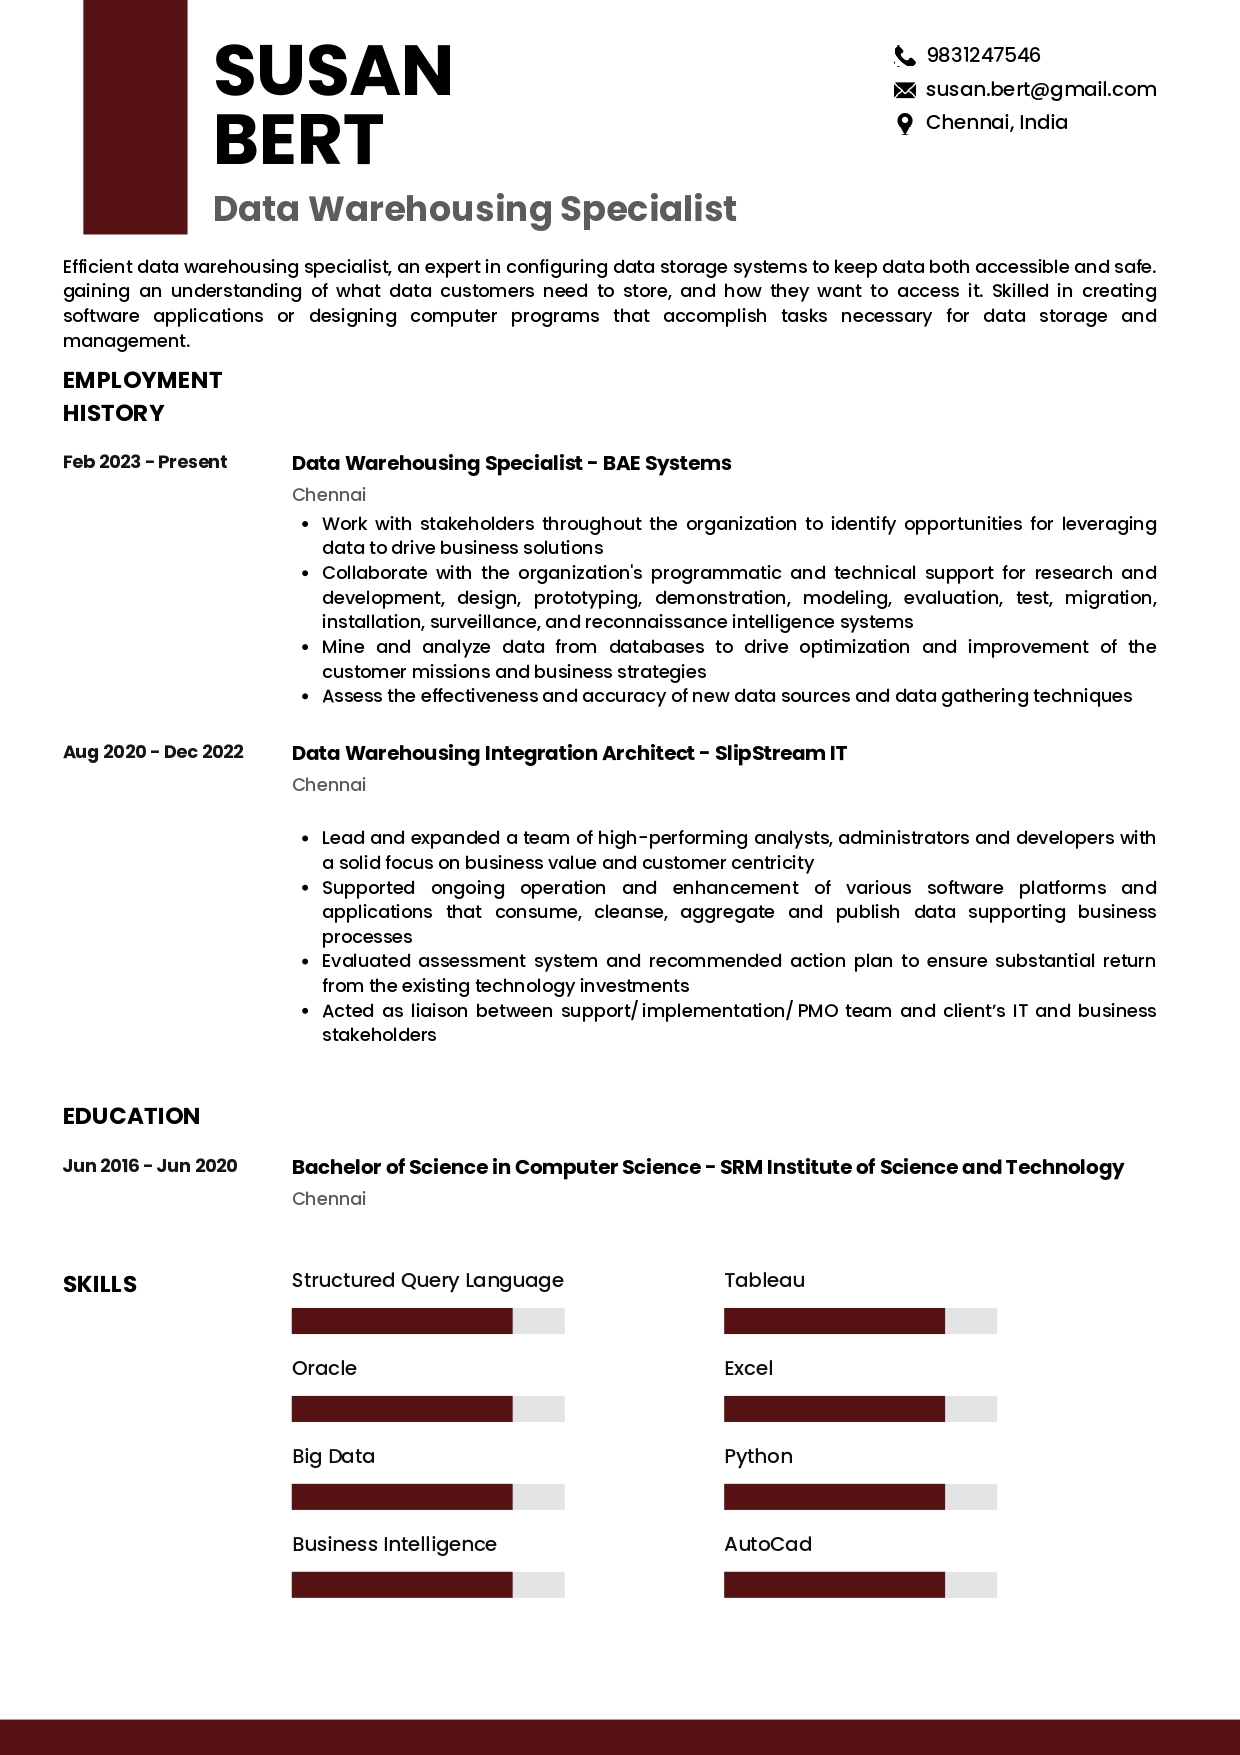 Resume of Data Warehousing Specialist built on Resumod